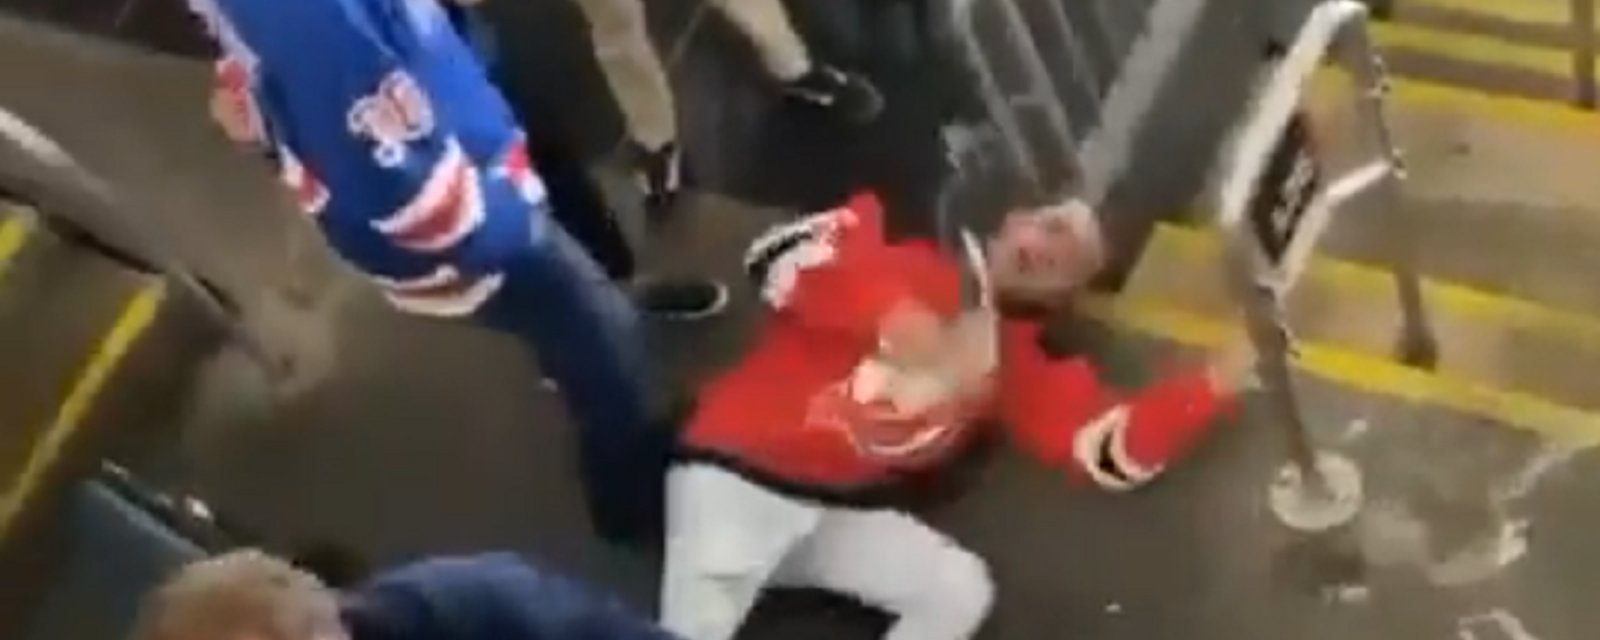 Devils fan choked unconscious after assaulting Rangers fan.